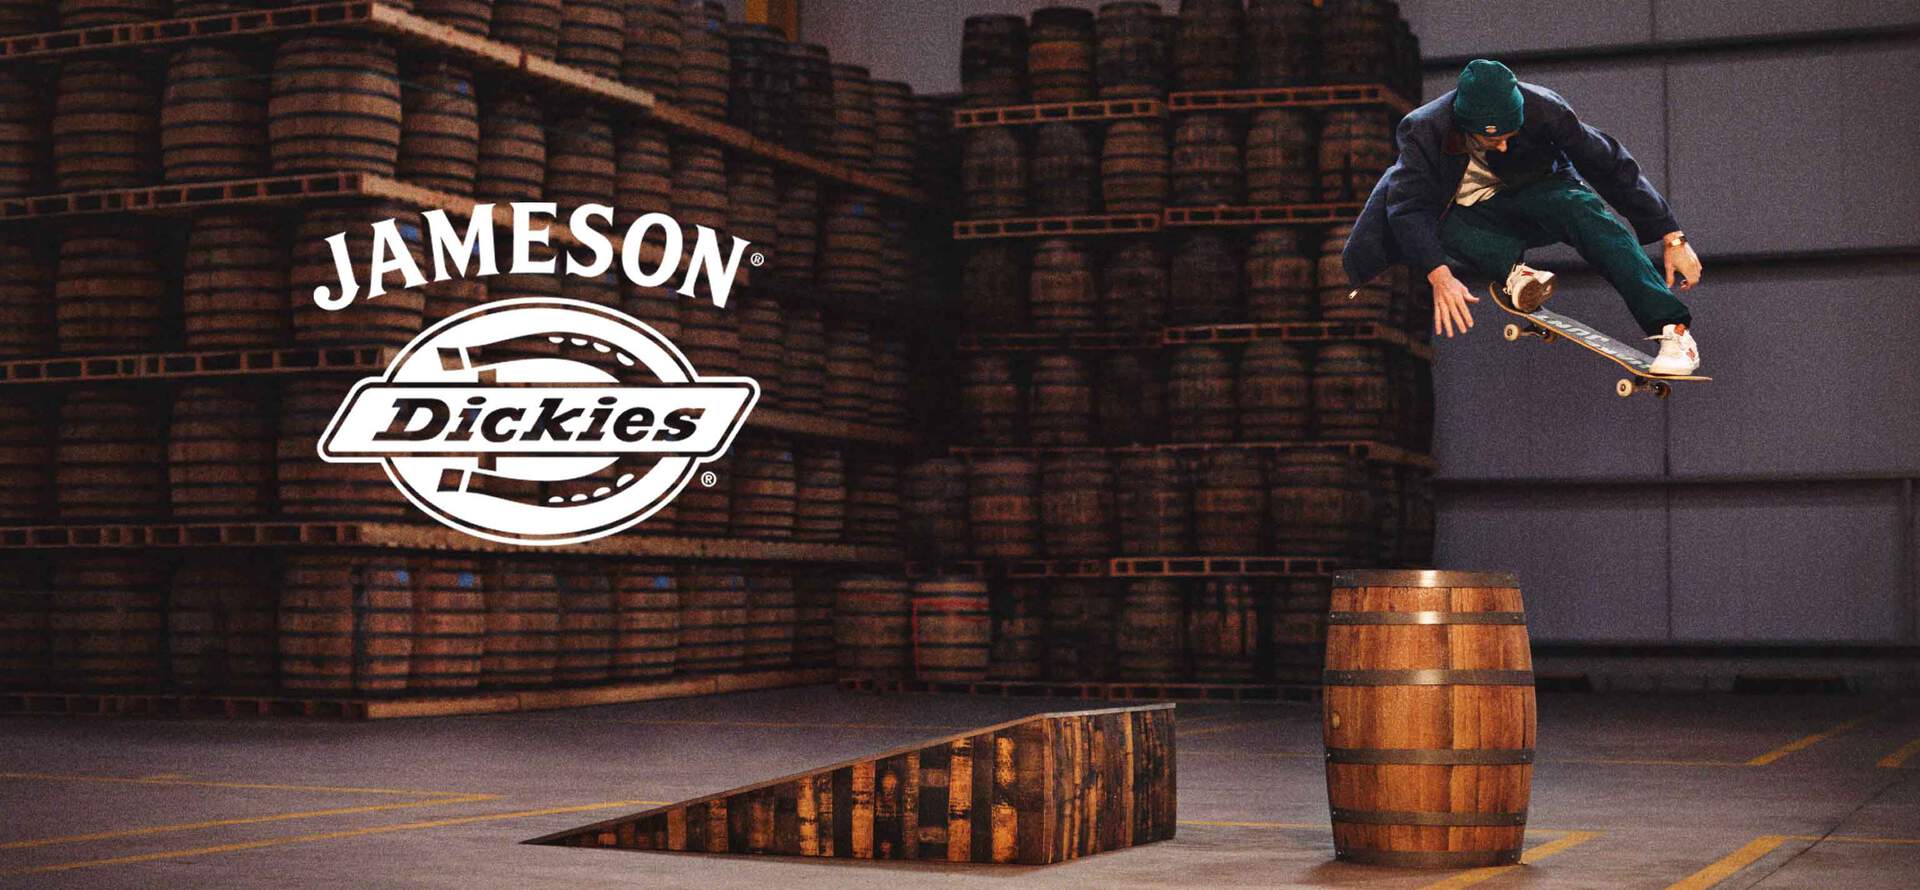 Jameson Skateboarder Jumping a Barrel of Whiskey